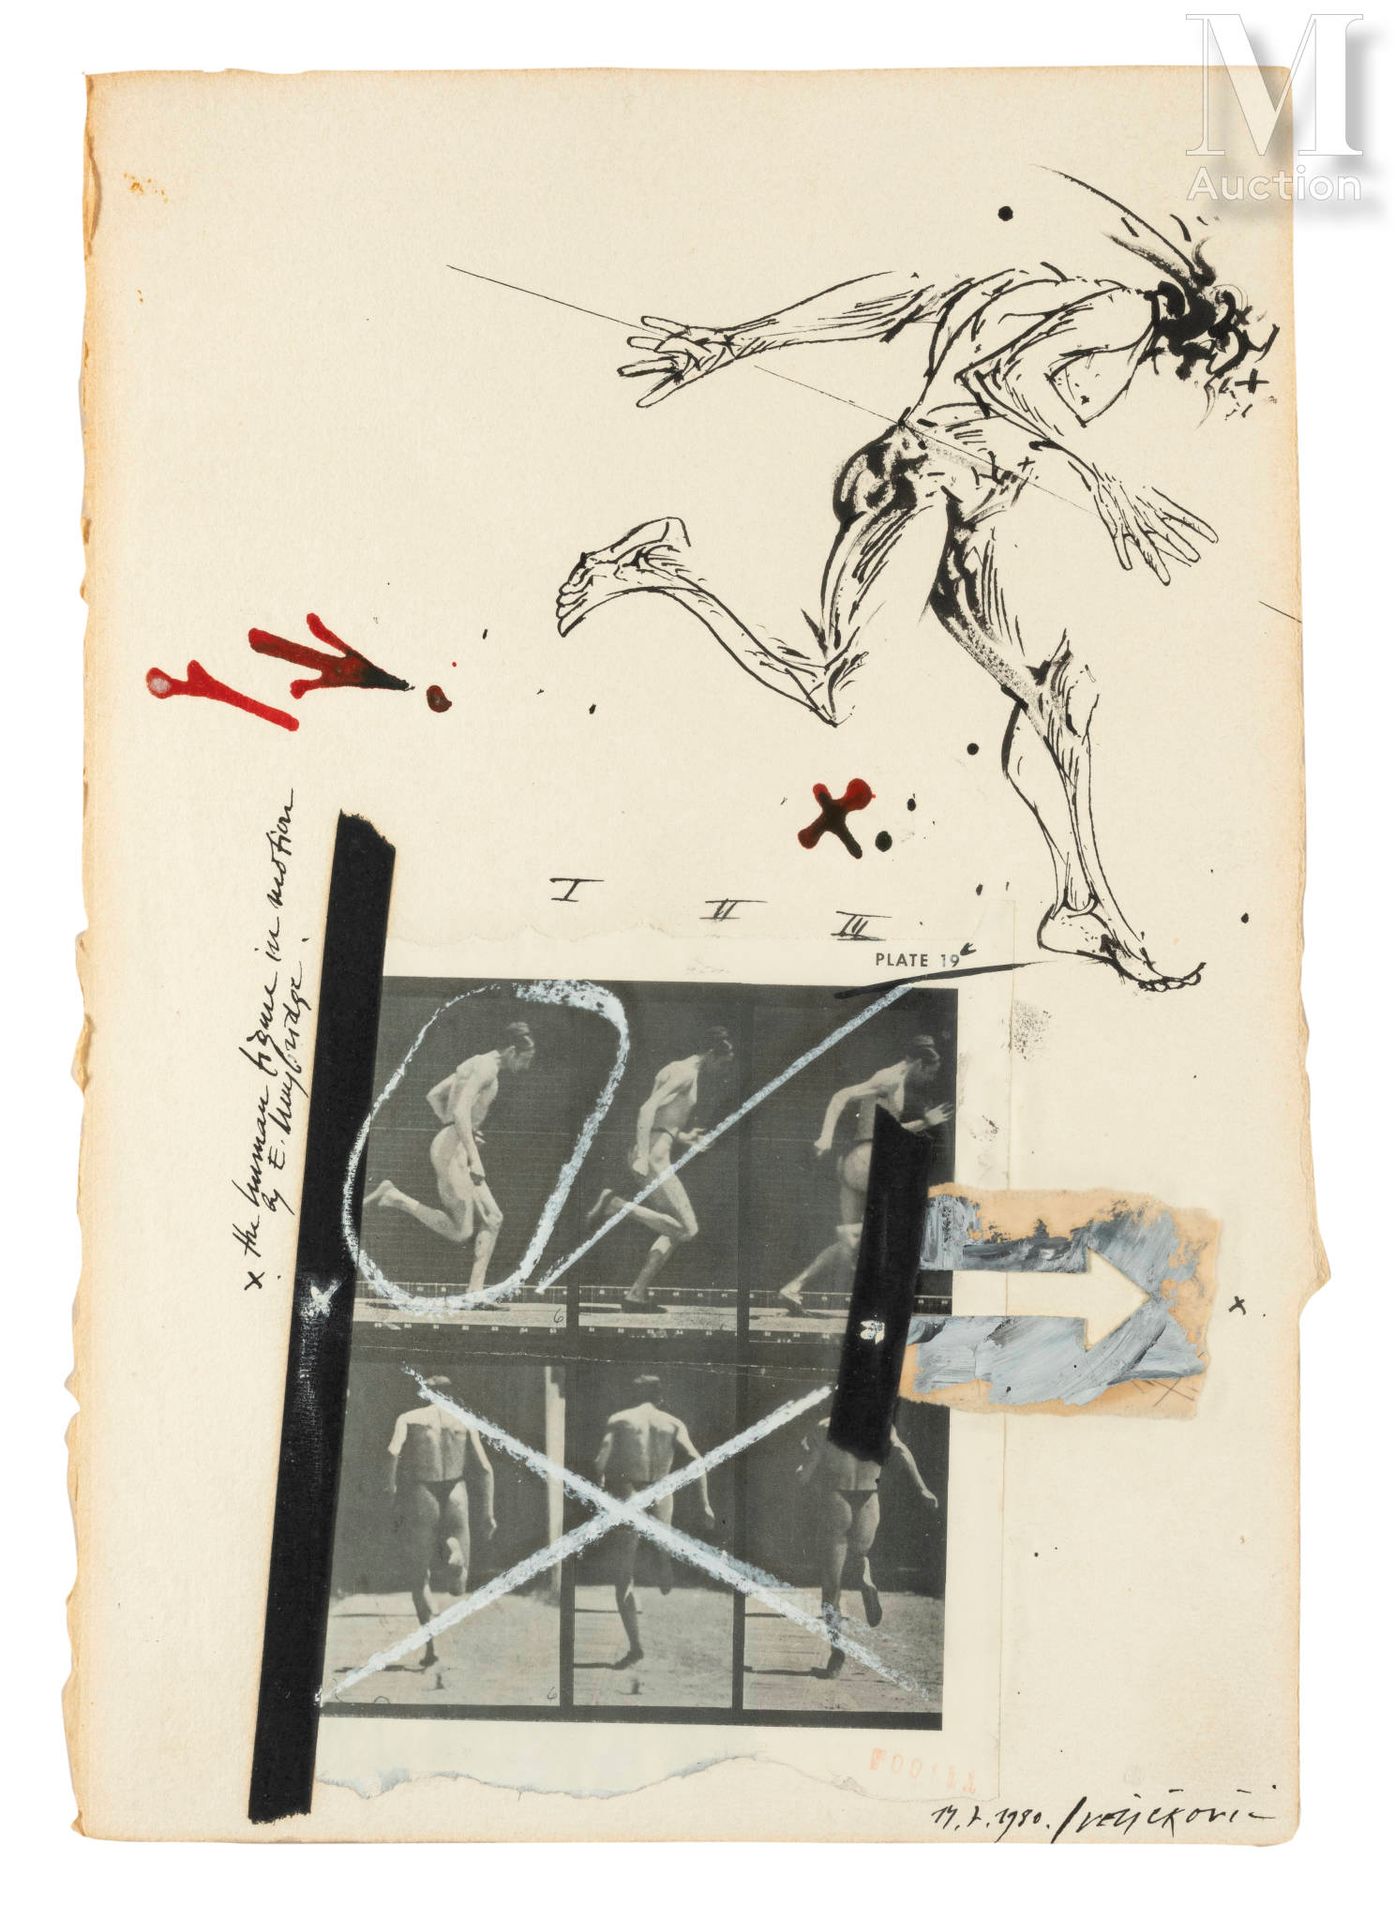 Vladimir VELICKOVIC (1935-2019) La figura humana en movimiento, 1980

Tinta, acr&hellip;